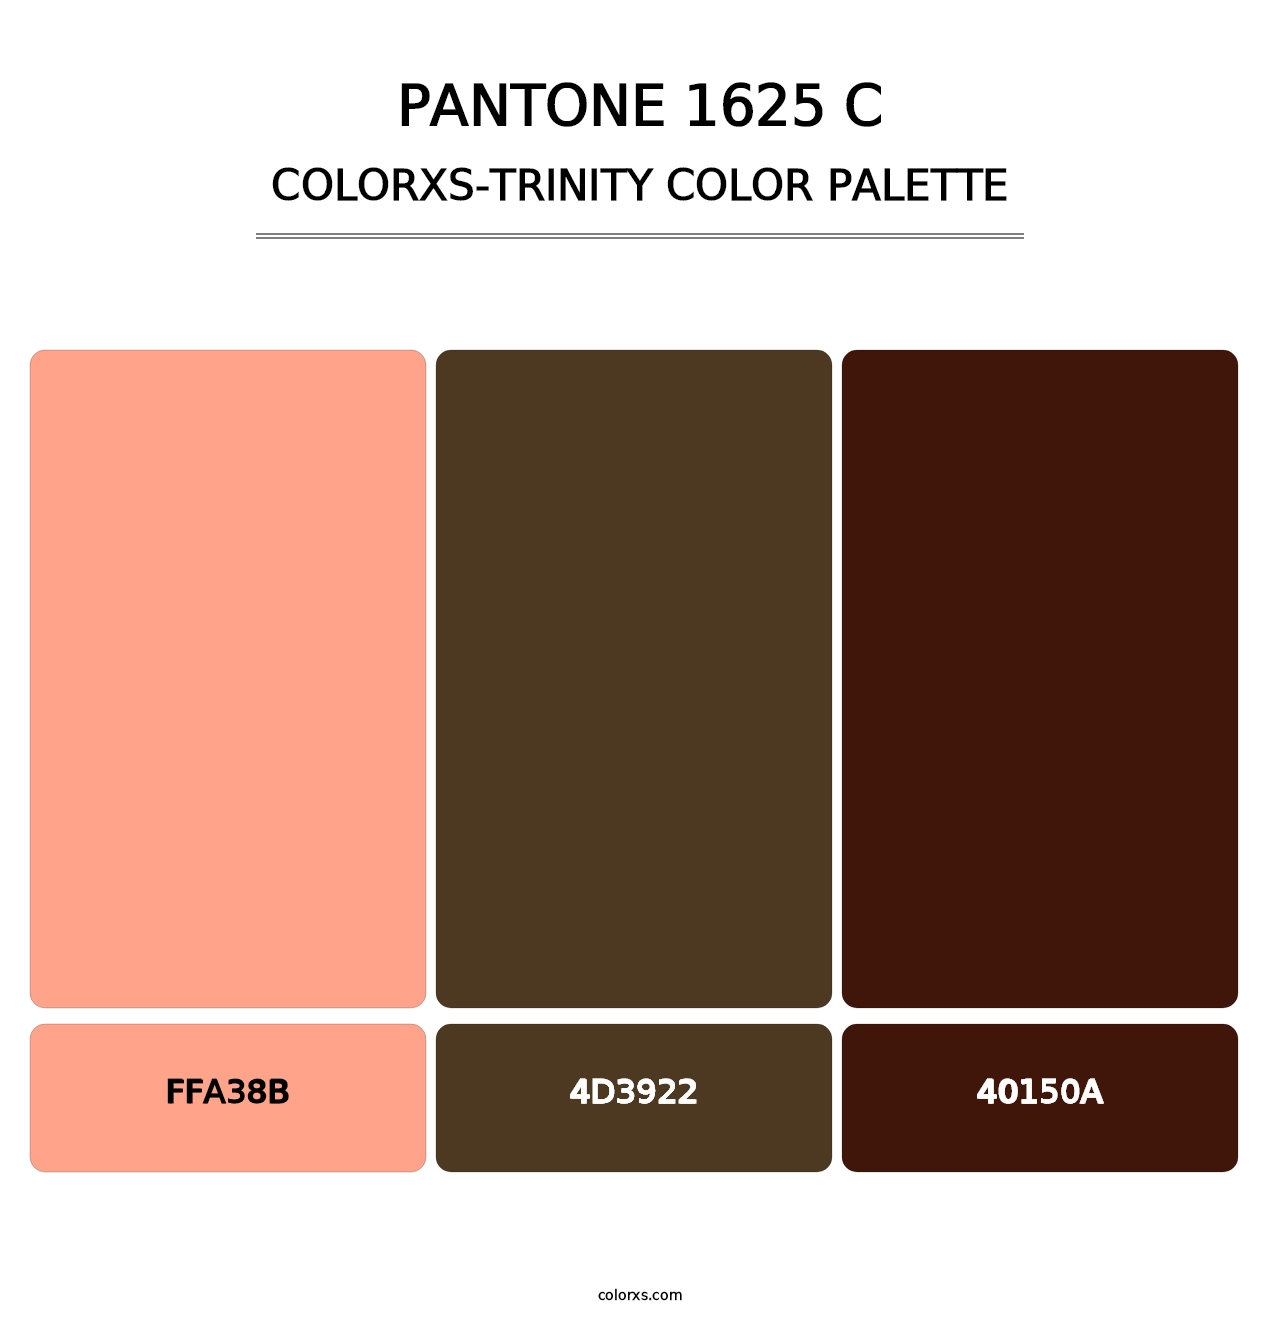 PANTONE 1625 C - Colorxs Trinity Palette